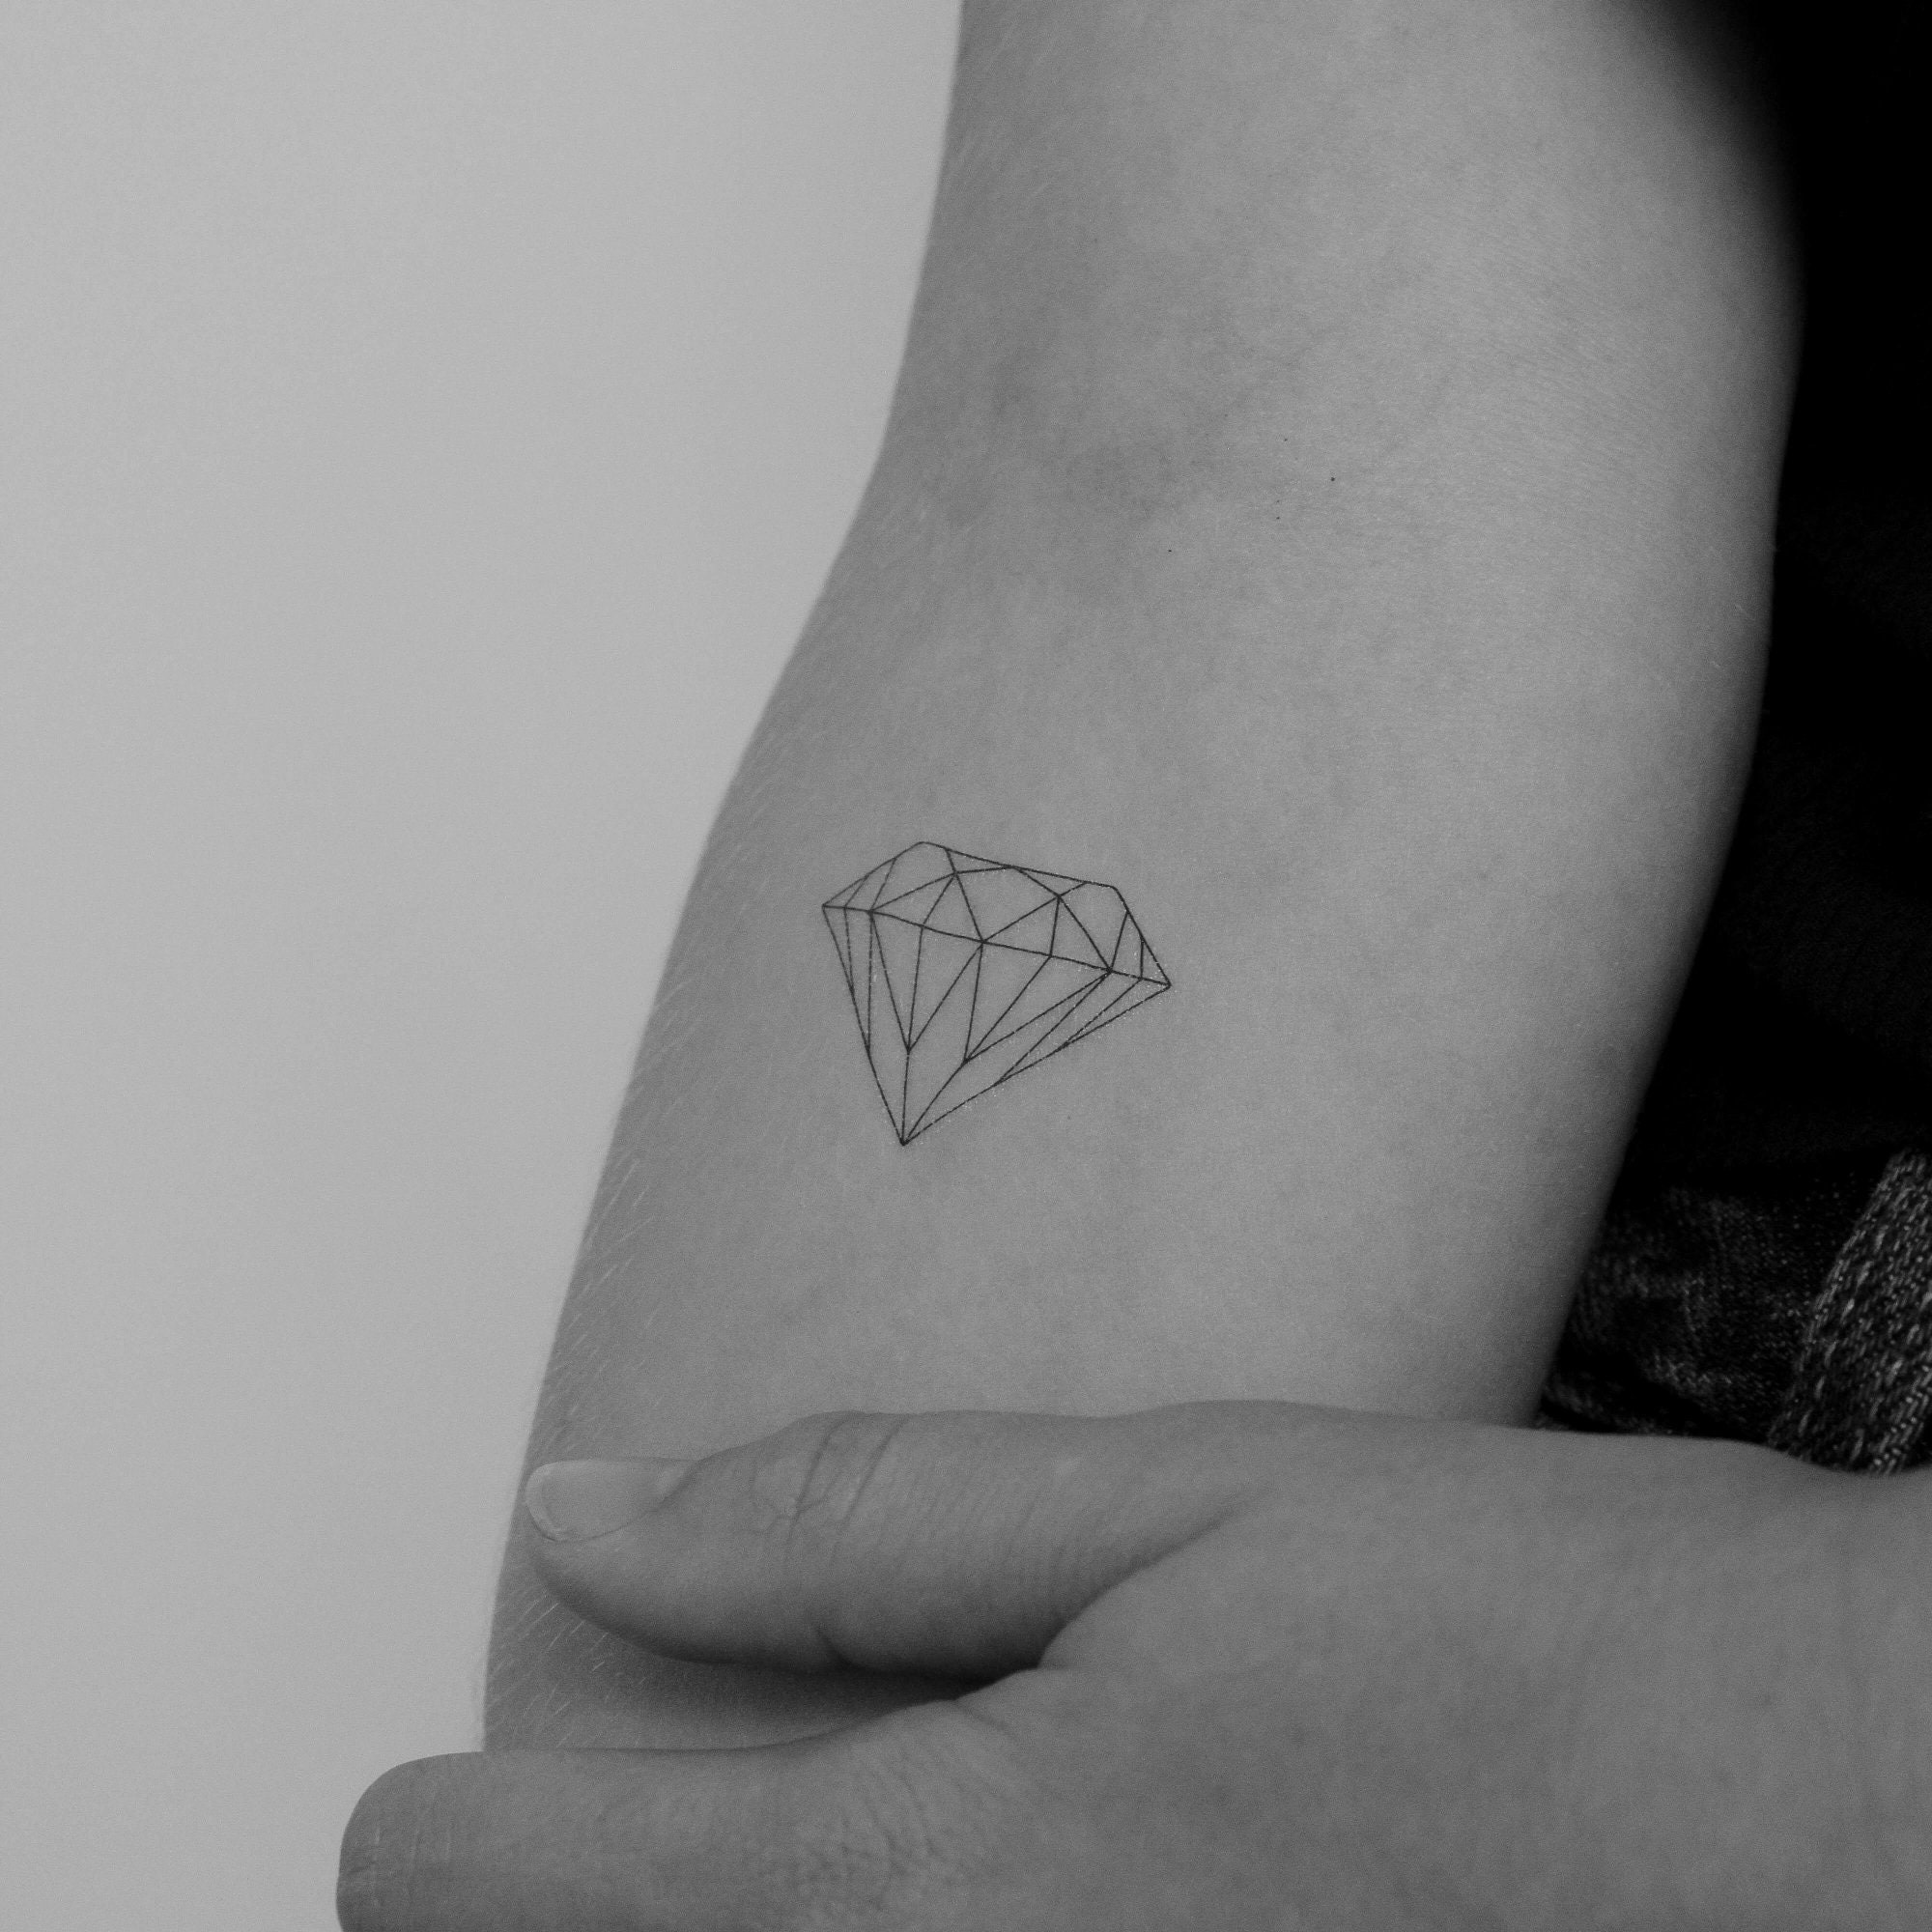 Geometric Diamond Tattoo by Tarin-Moore on DeviantArt